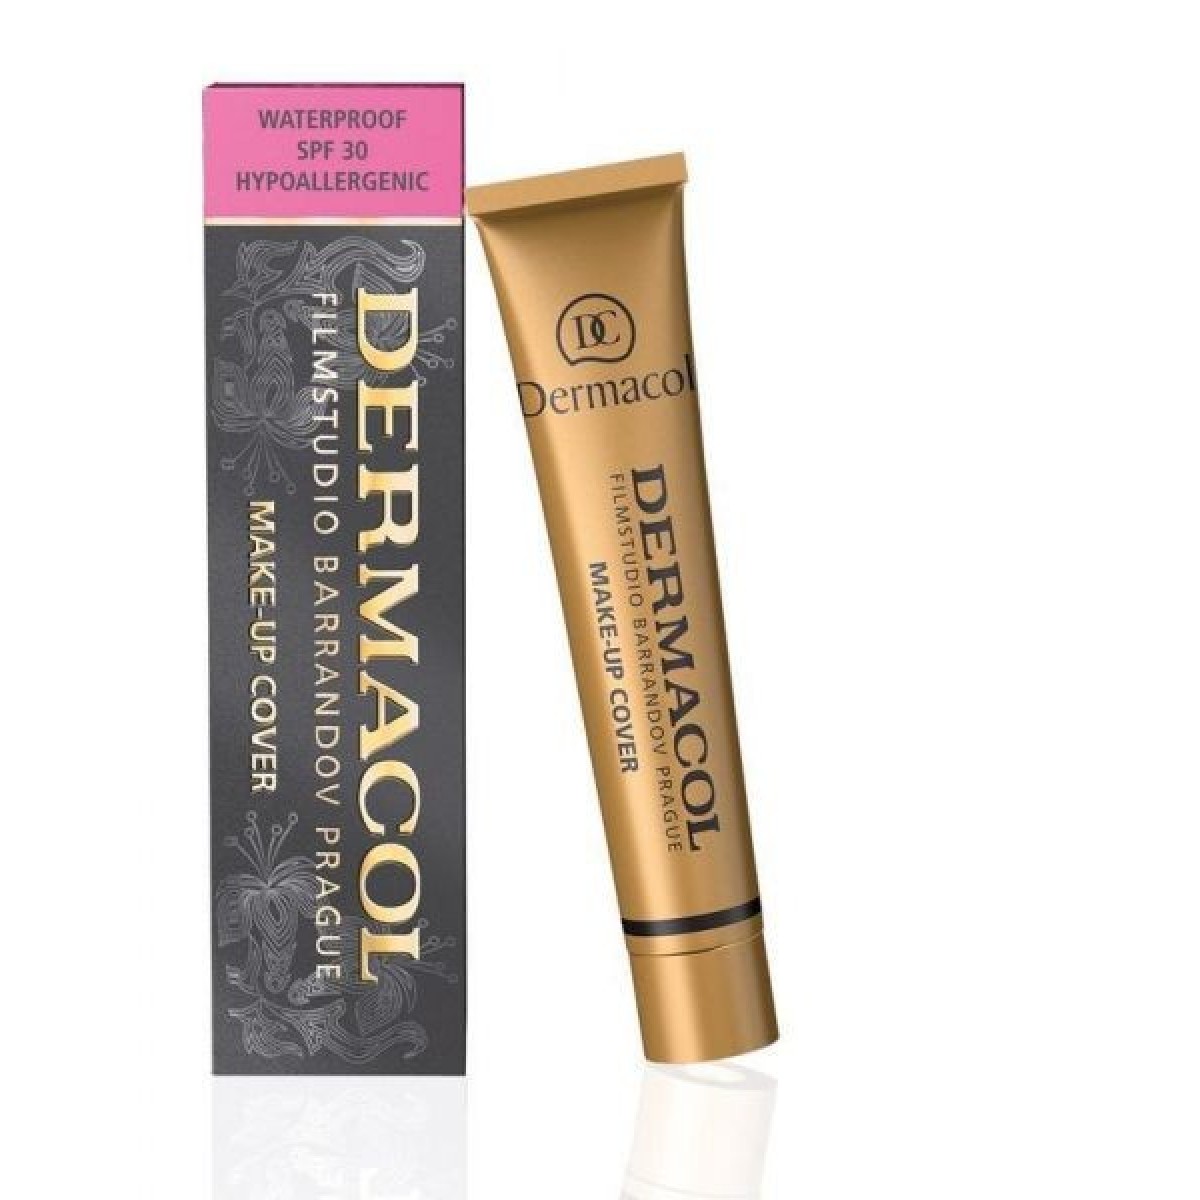 Dermacol | Make-Up Cover Waterproof SPF30 Foundation Υψηλής Κάλυψης | No.222 | 30g